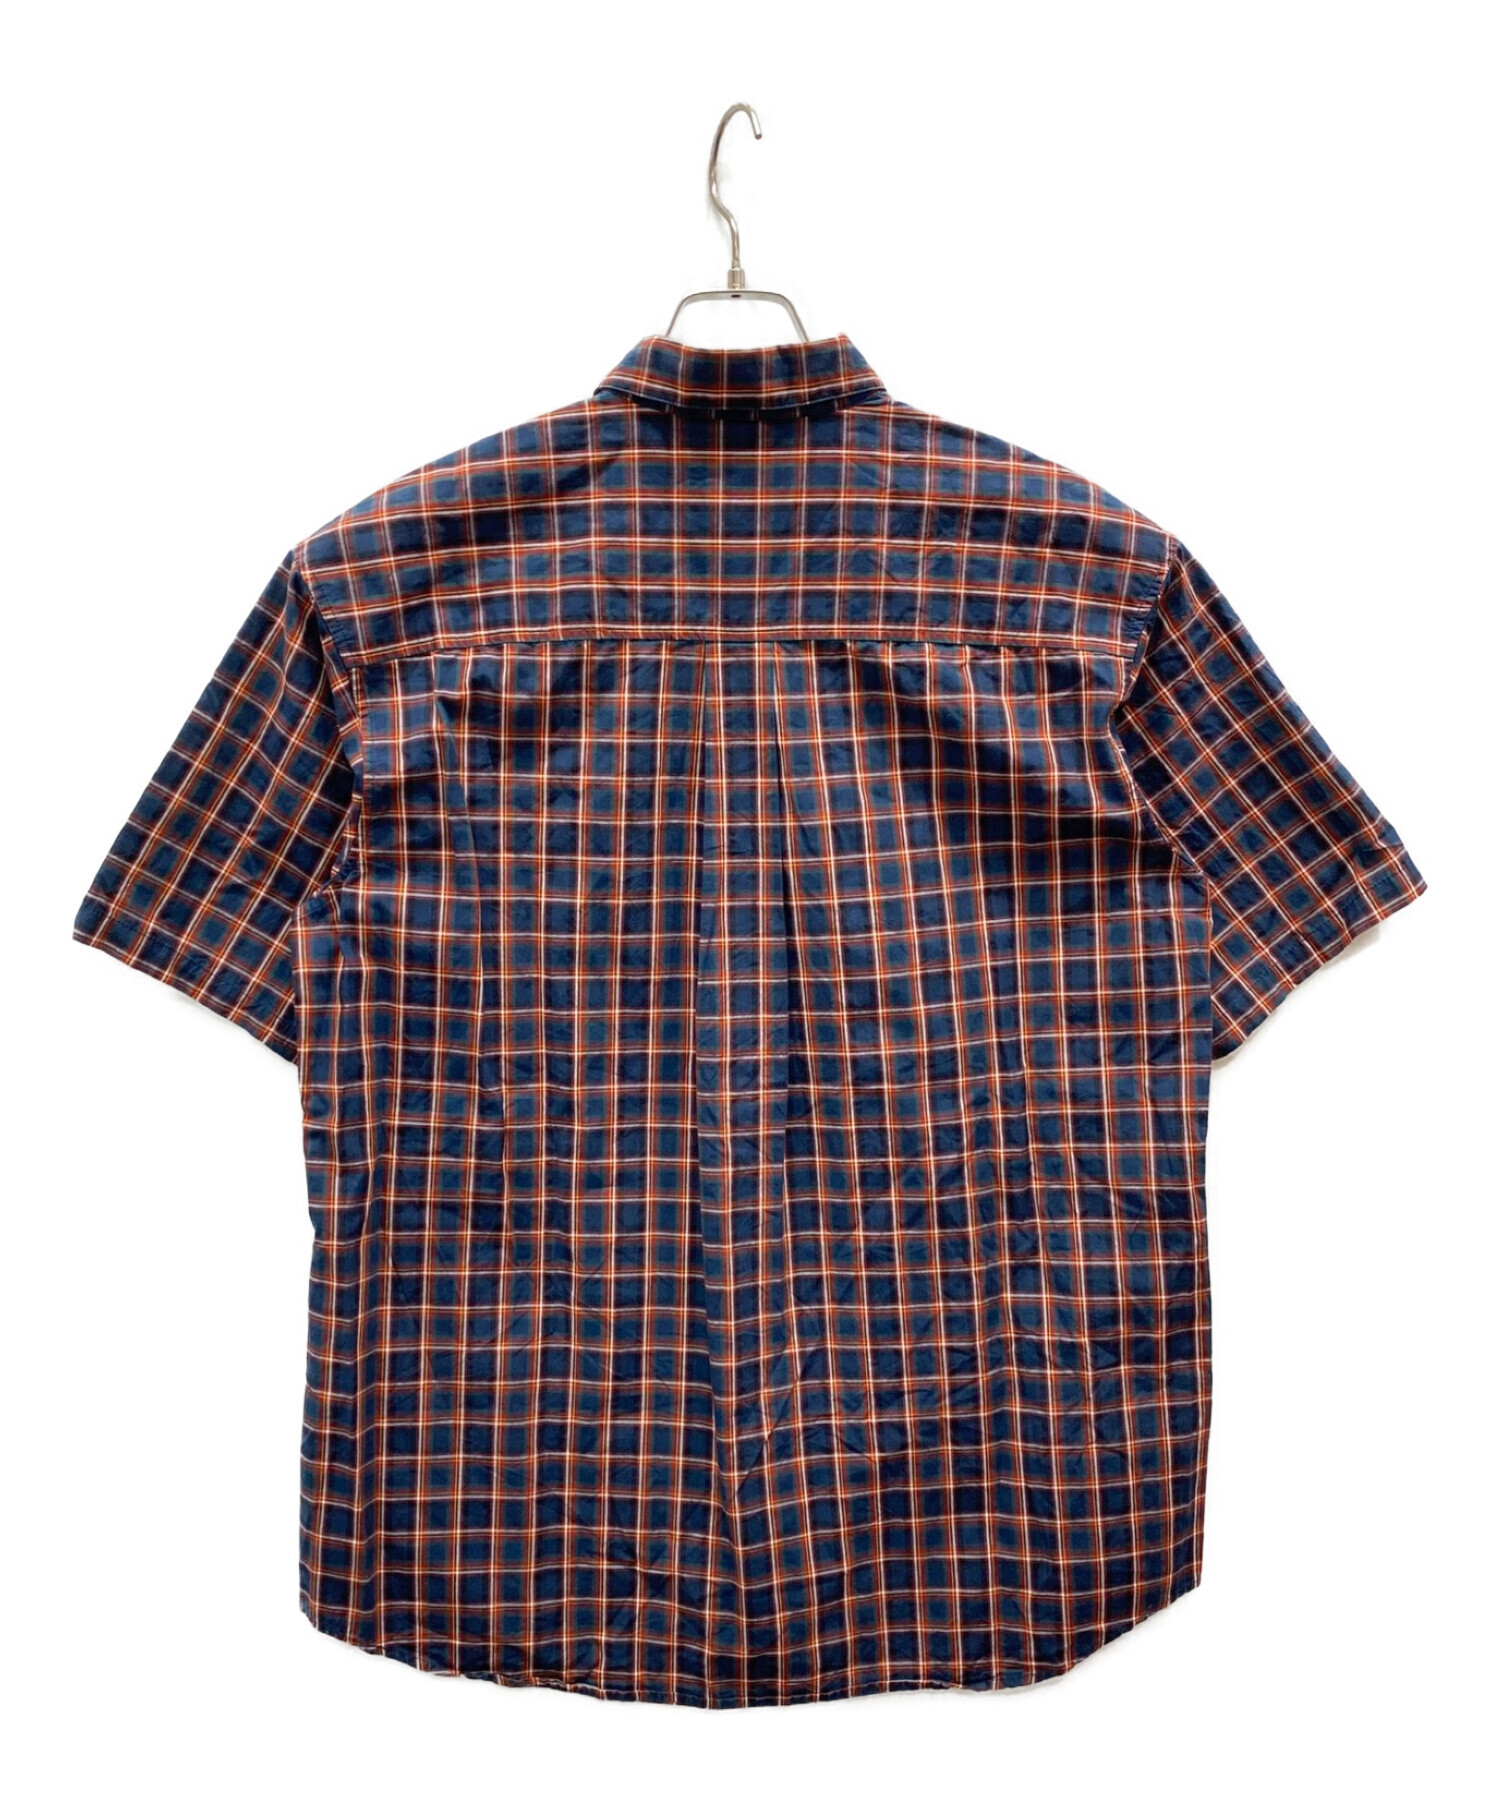 UNDERCOVER (アンダーカバー) 半袖チェックシャツ ネイビー×レッド サイズ:1